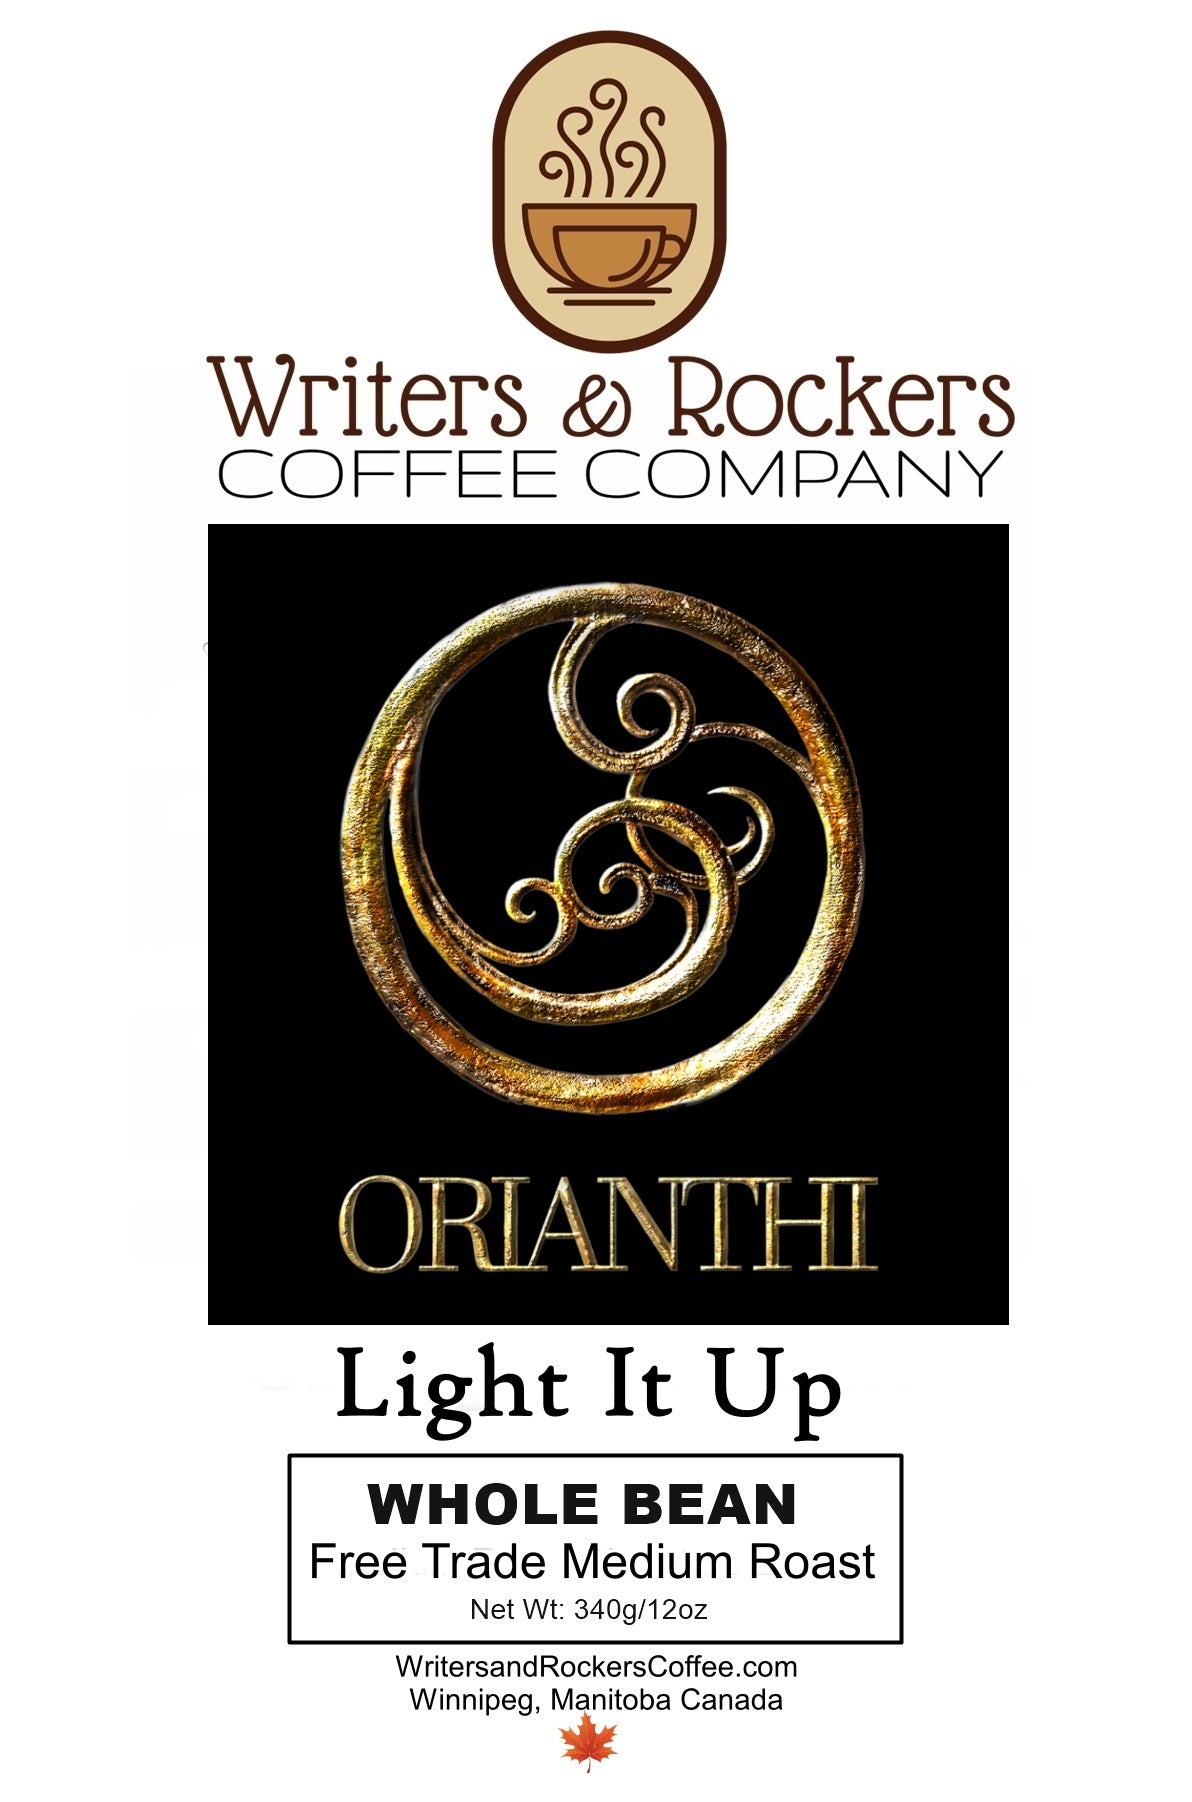 Orianthi's Light It Up